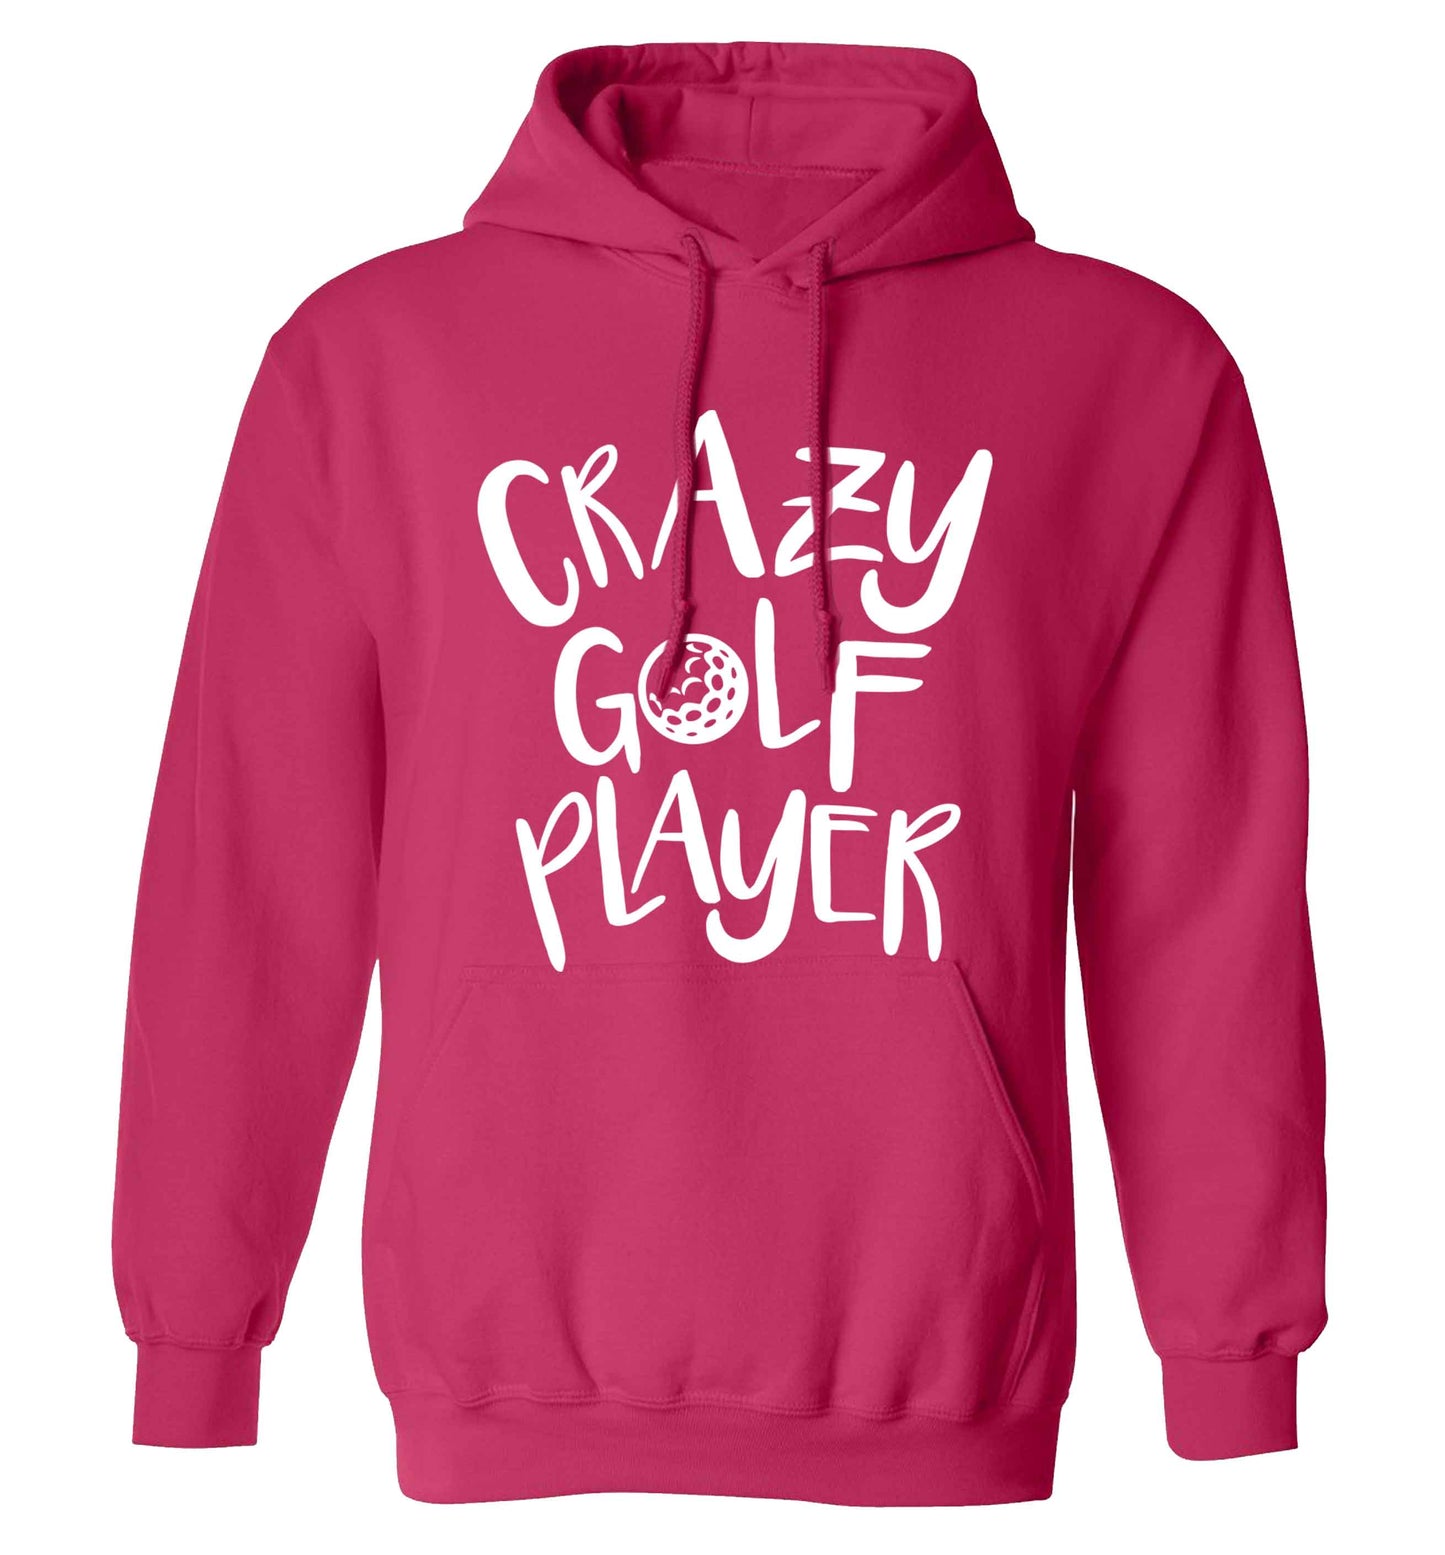 Crazy golf player adults unisex pink hoodie 2XL